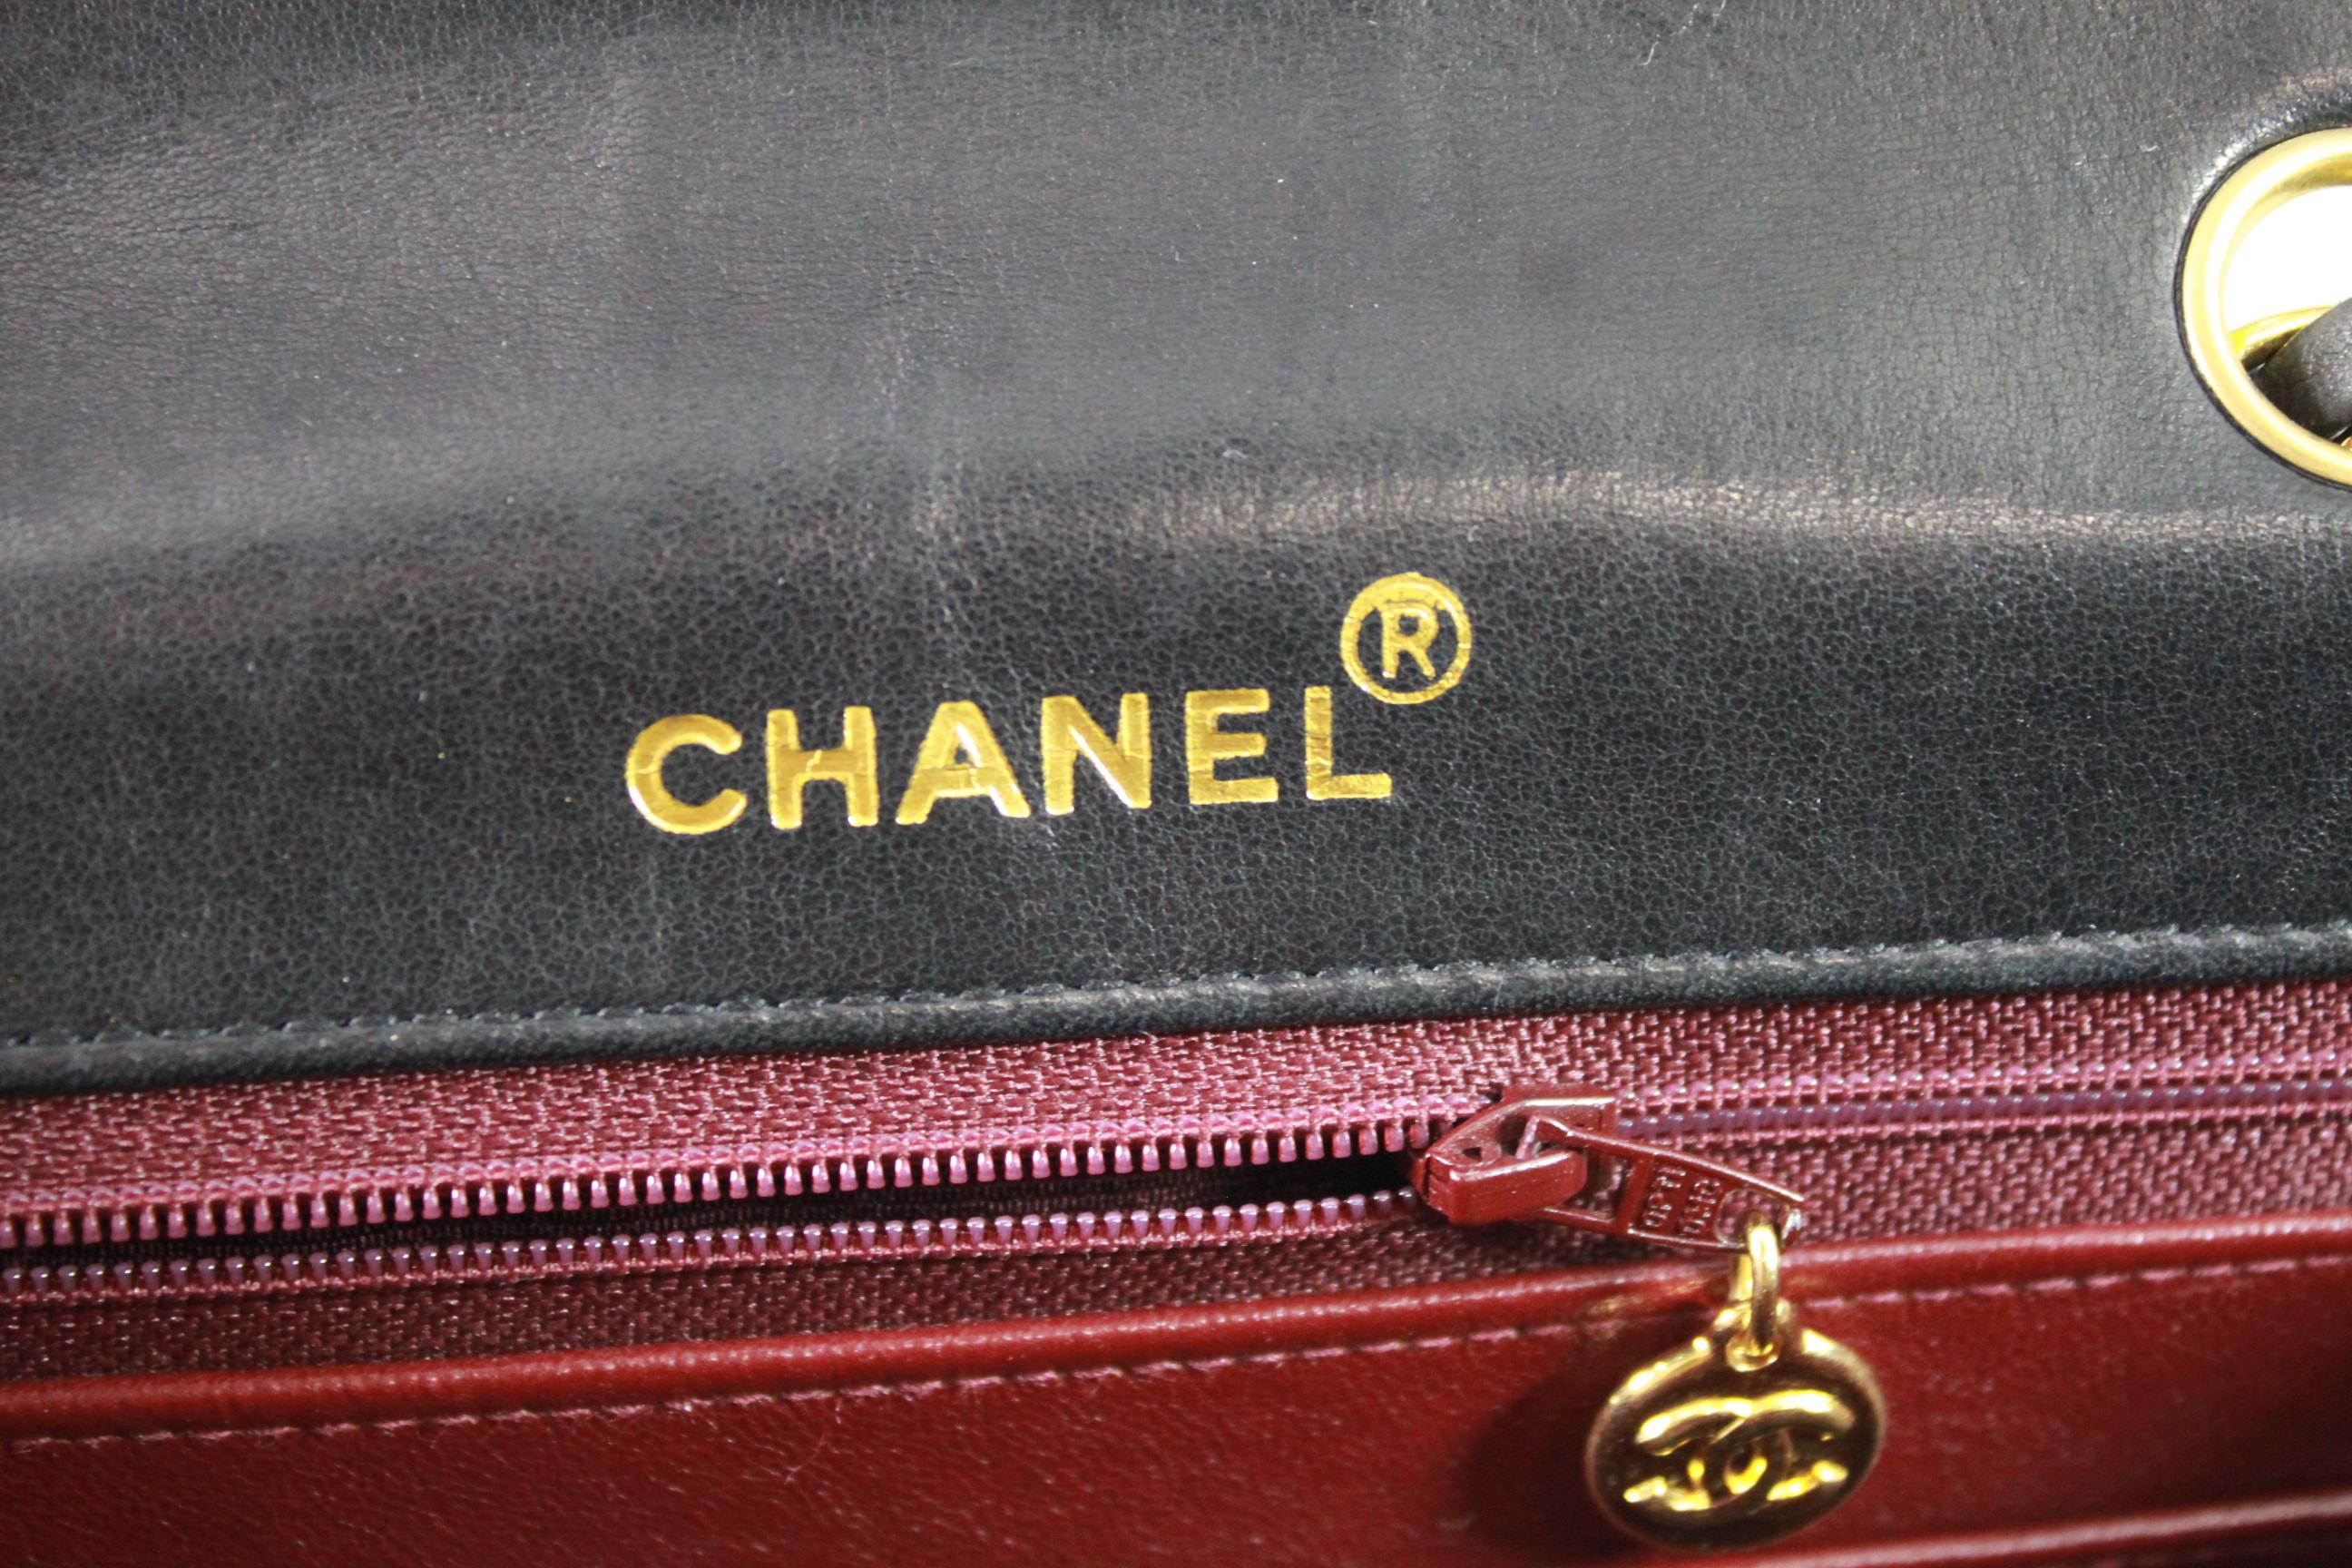 1991 Vintage Chanel Black Lambskin Leather Bag with 2.55 Golden Hardware 5